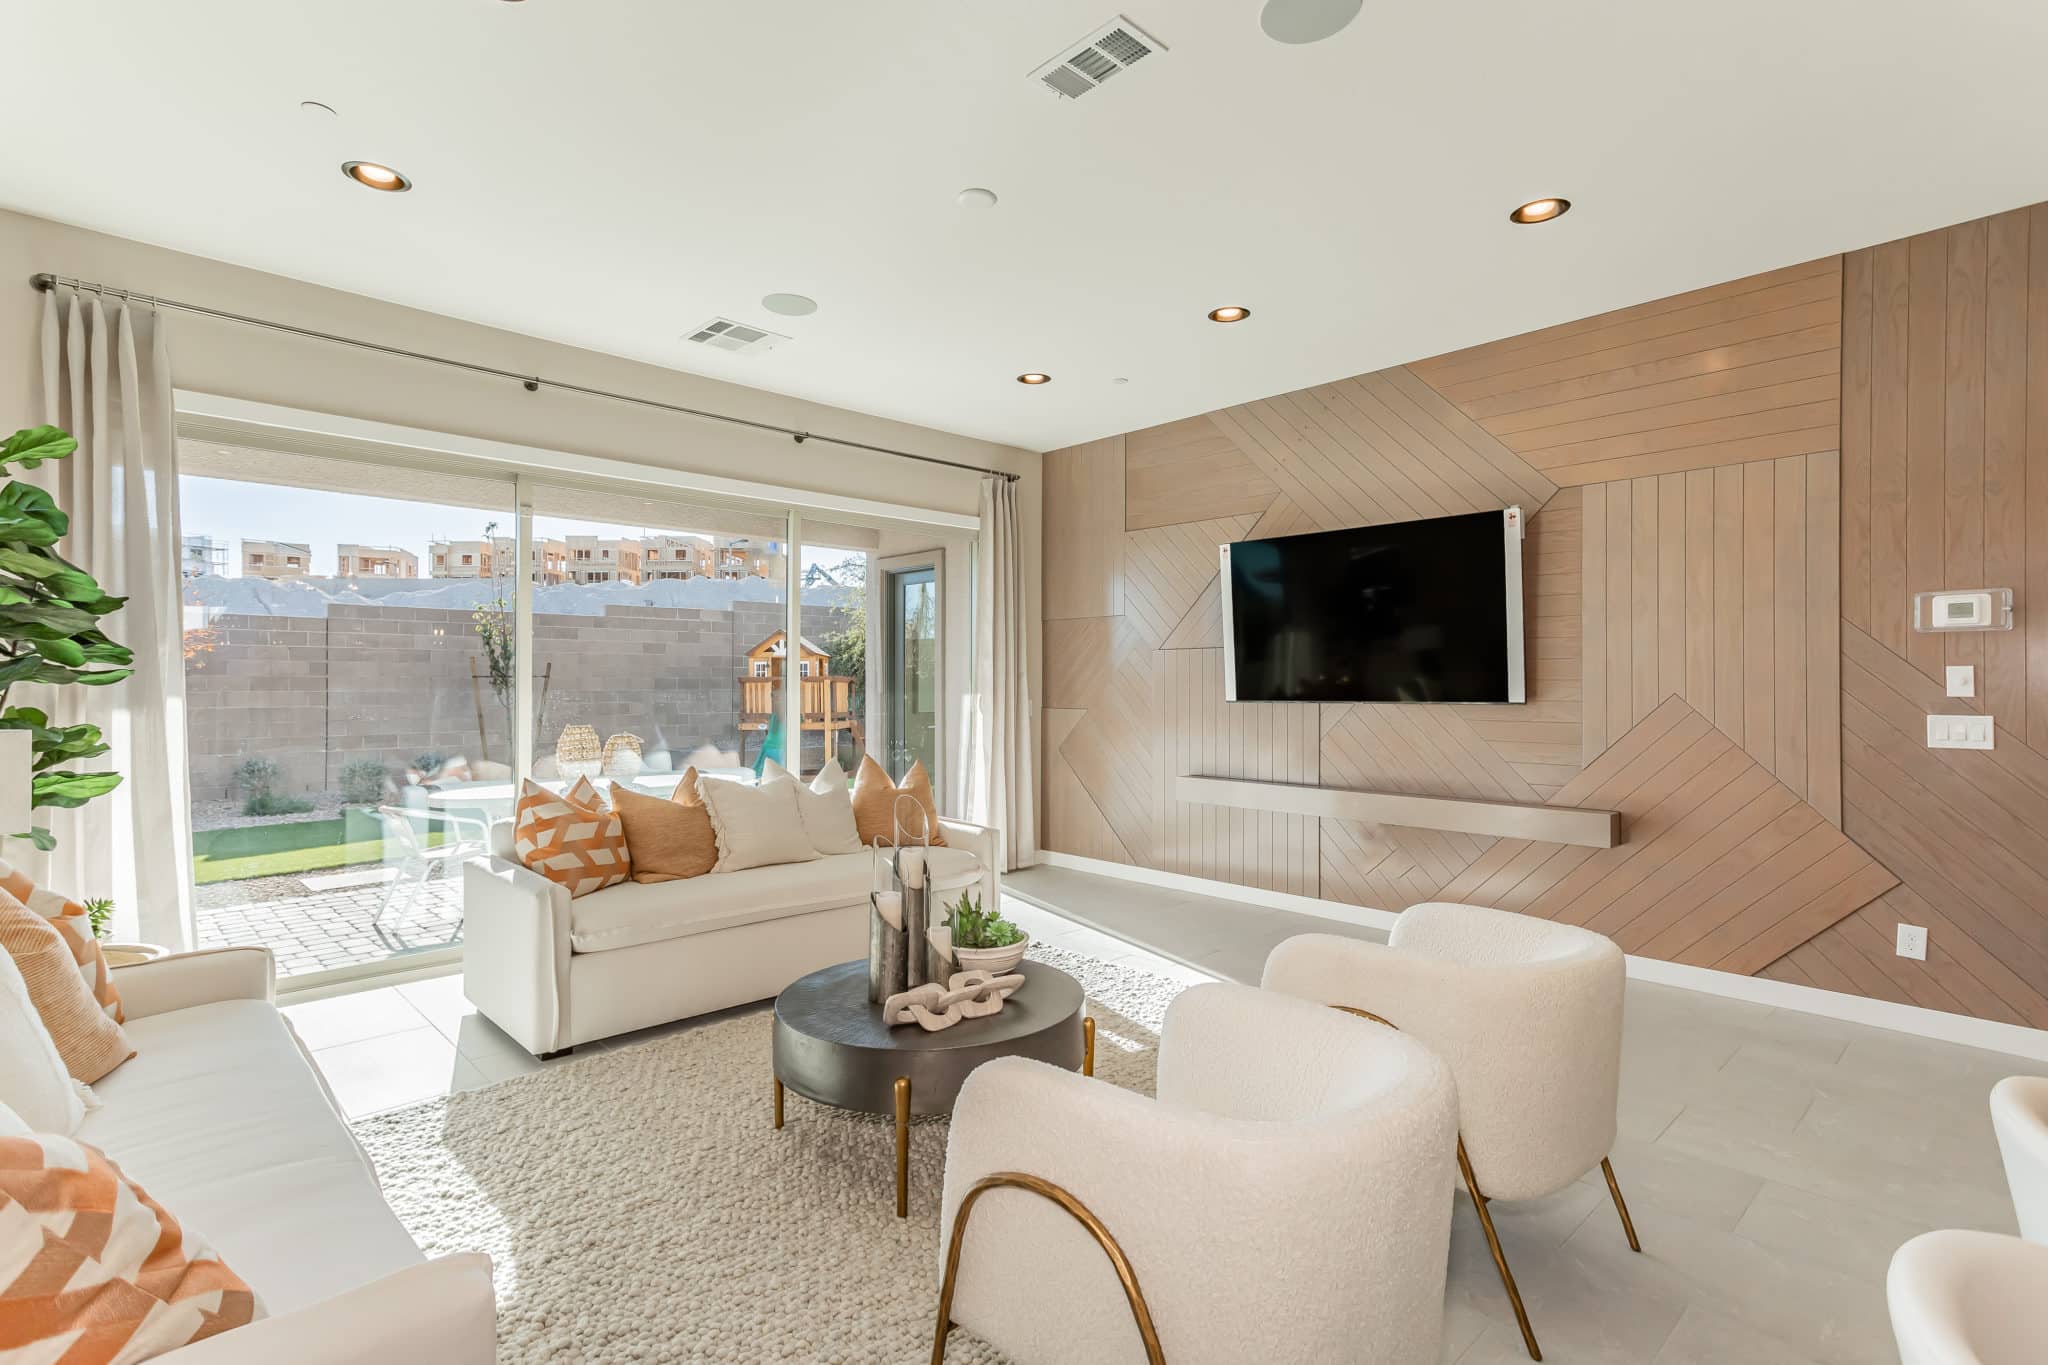 Living Room of Kestrel Plan 3 at Falcon Crest by Woodside